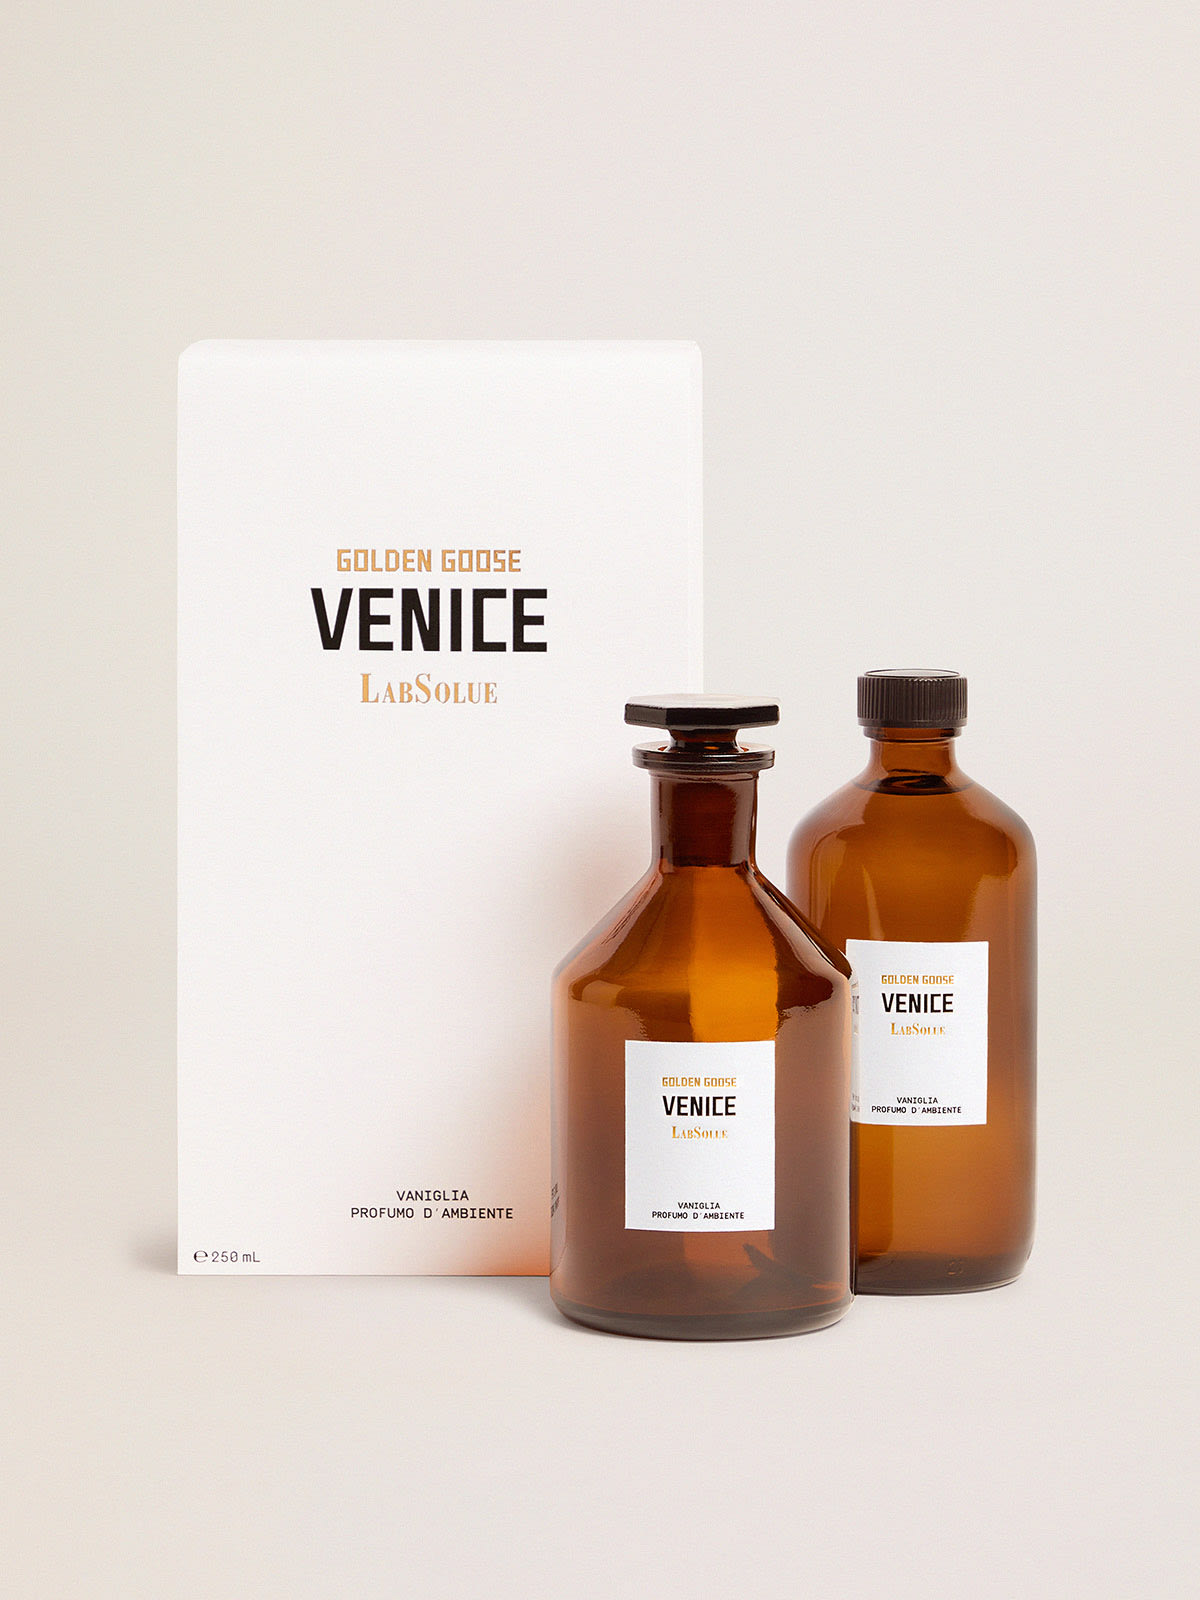 Golden Goose - Venice Essence Vaniglia Fragranza d'ambiente 250 ml in 